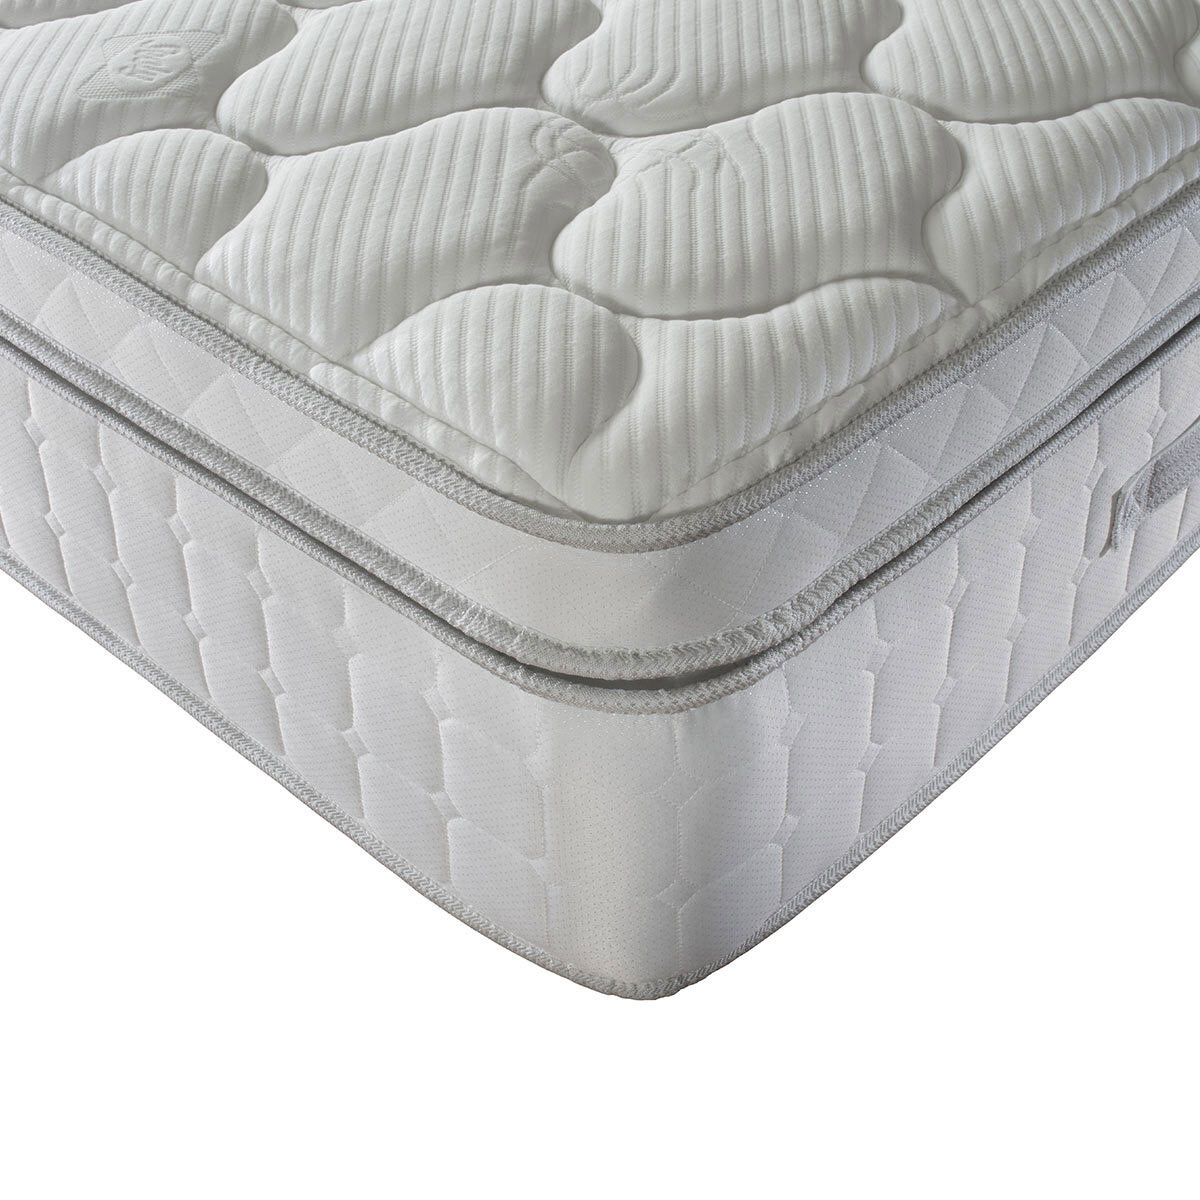 corner image of mattress